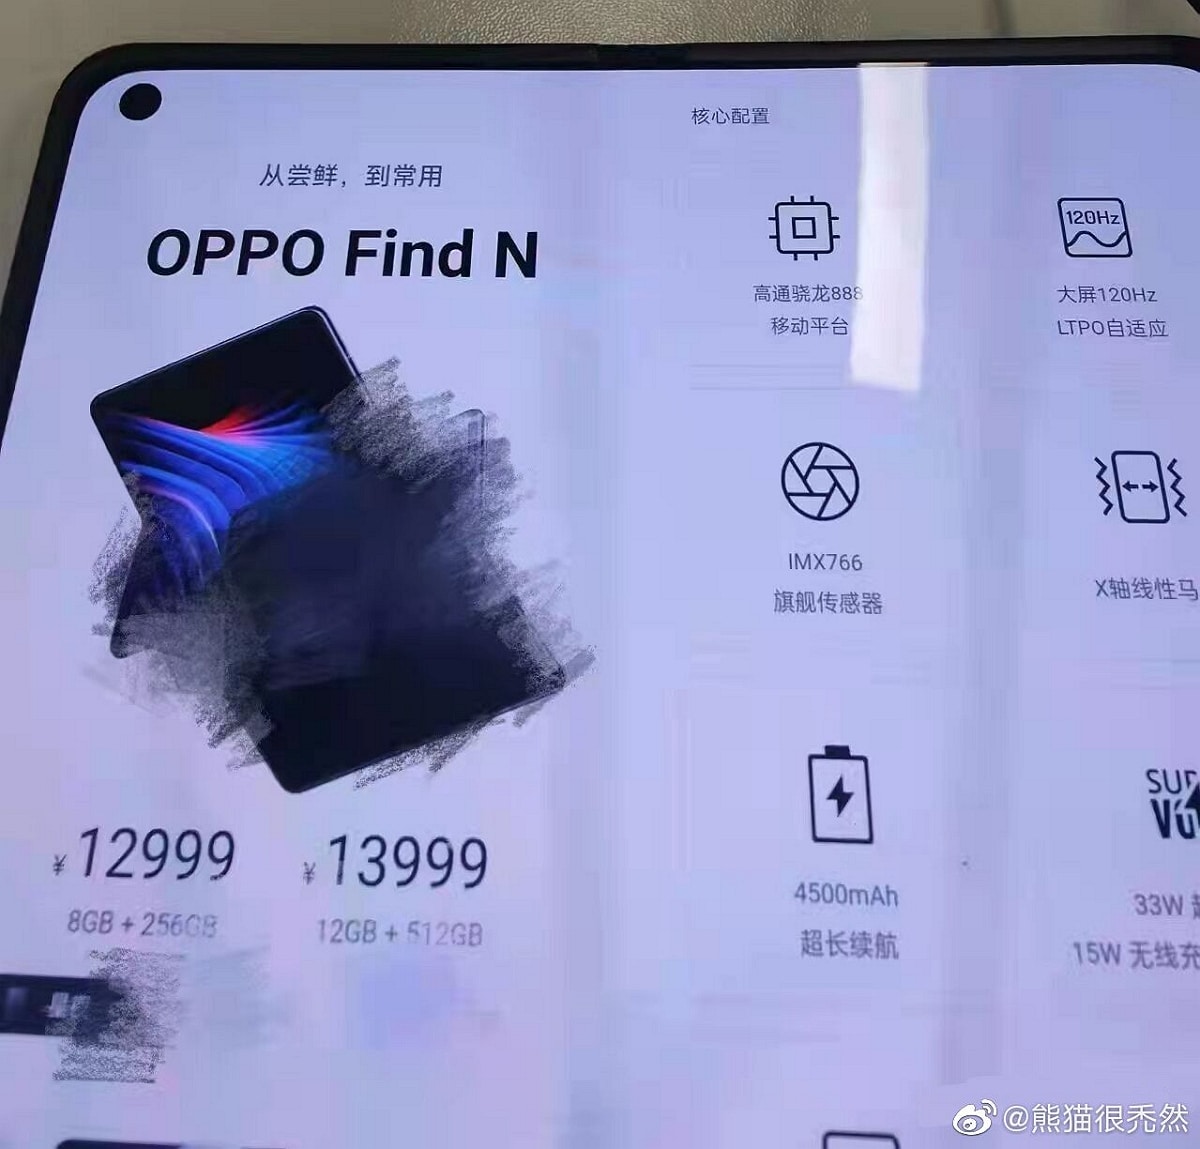 OPPO Find N specs